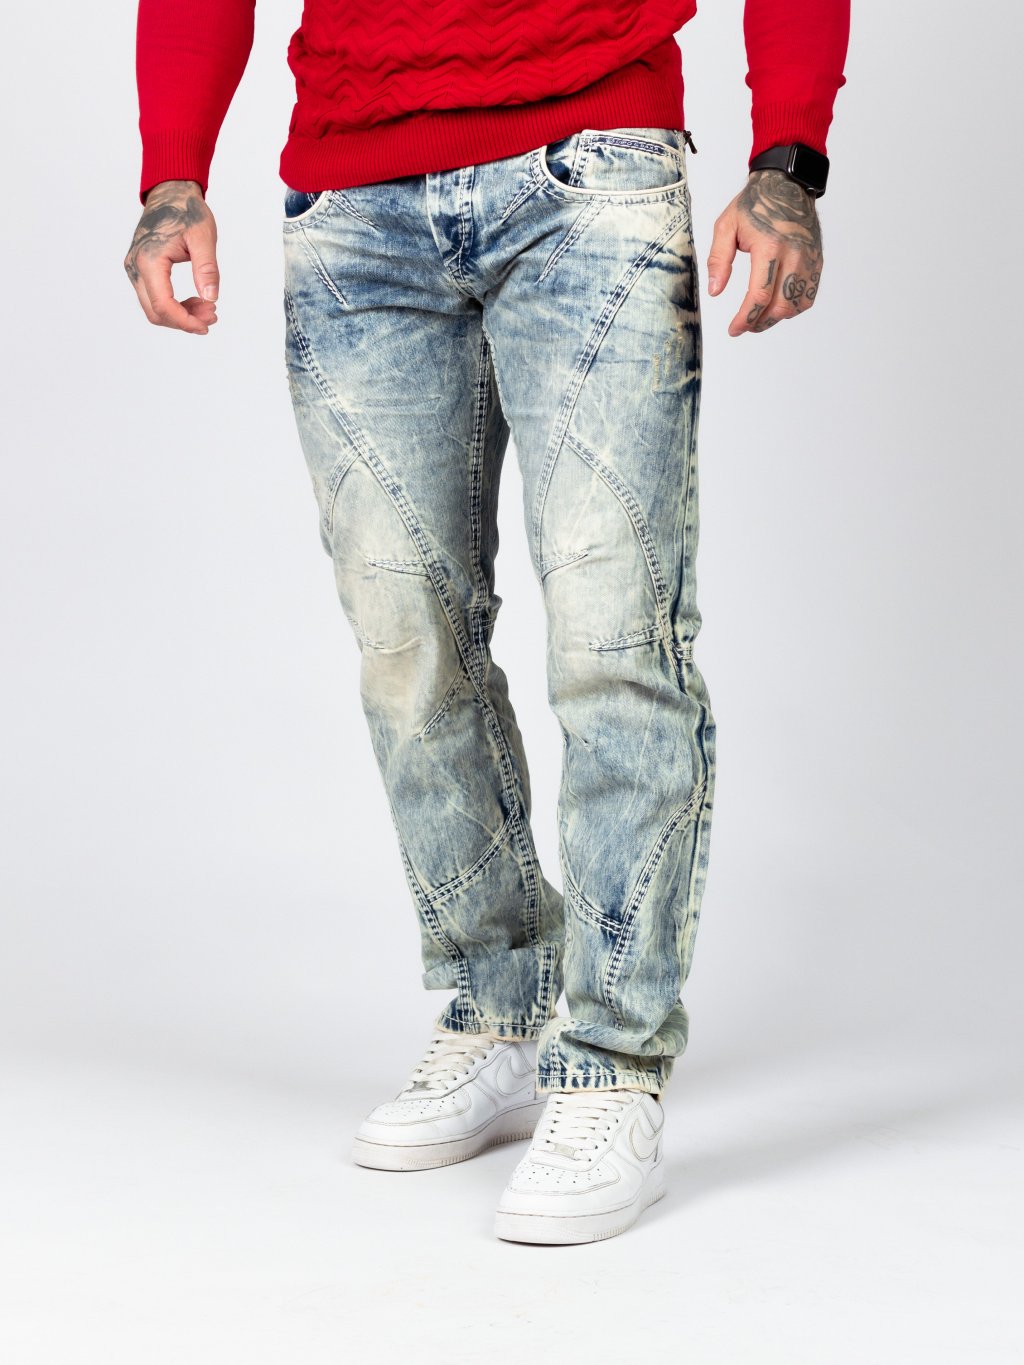 & CIPO 894A jeans Men\'s BAXX